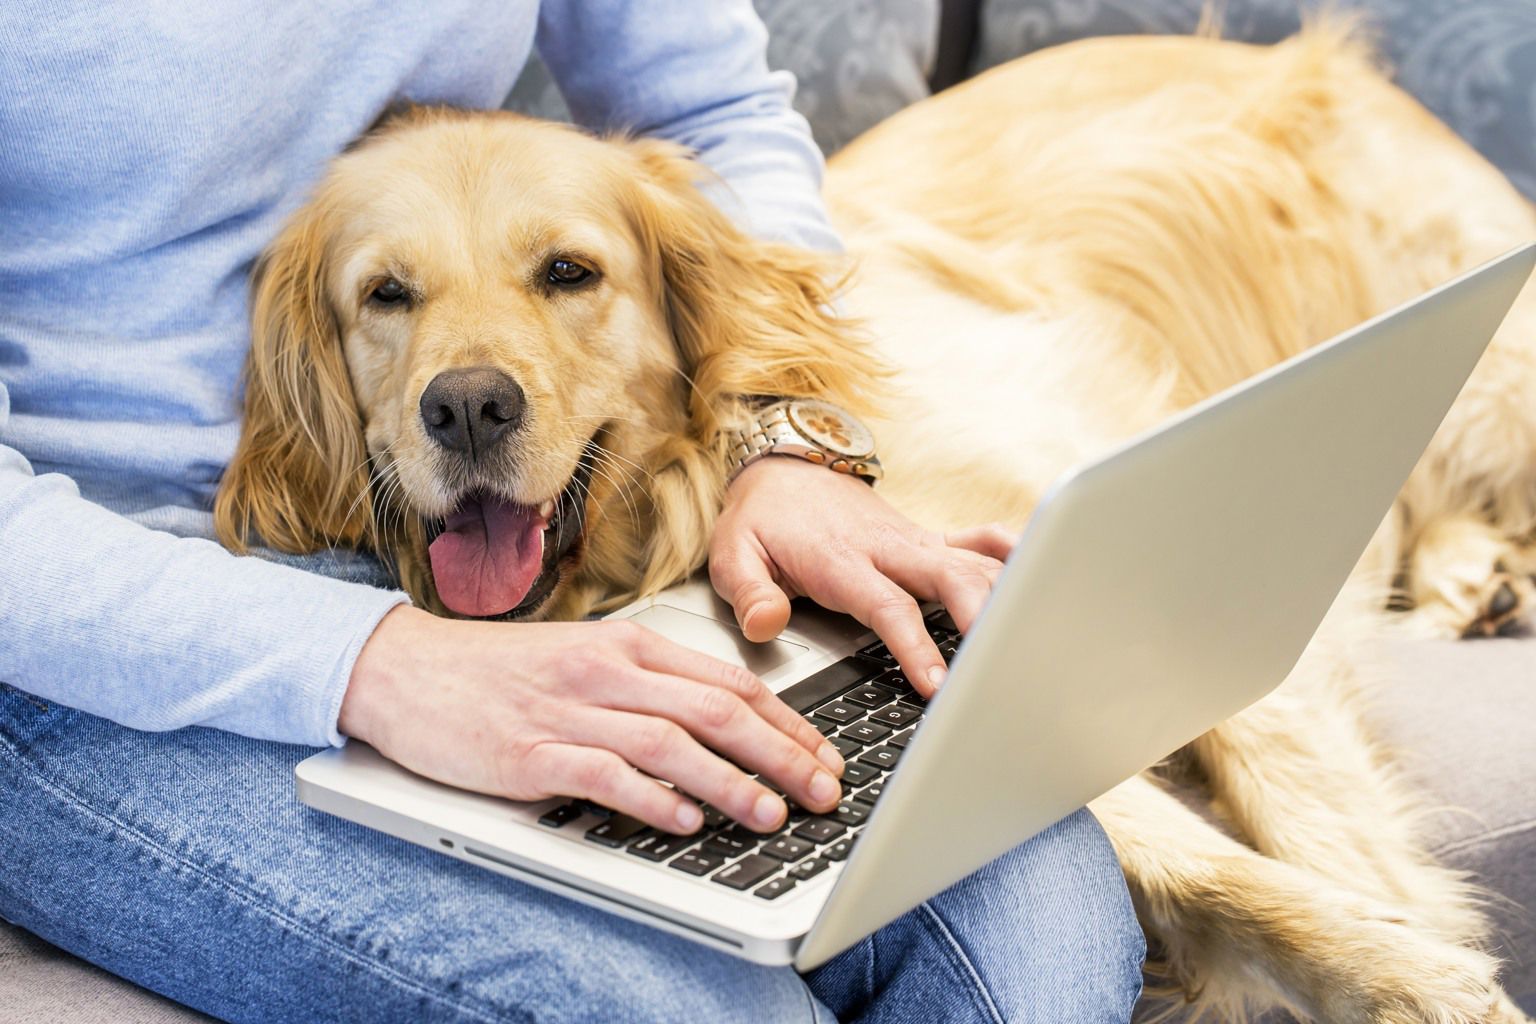 Hund myser med en person som sitter vid datorn